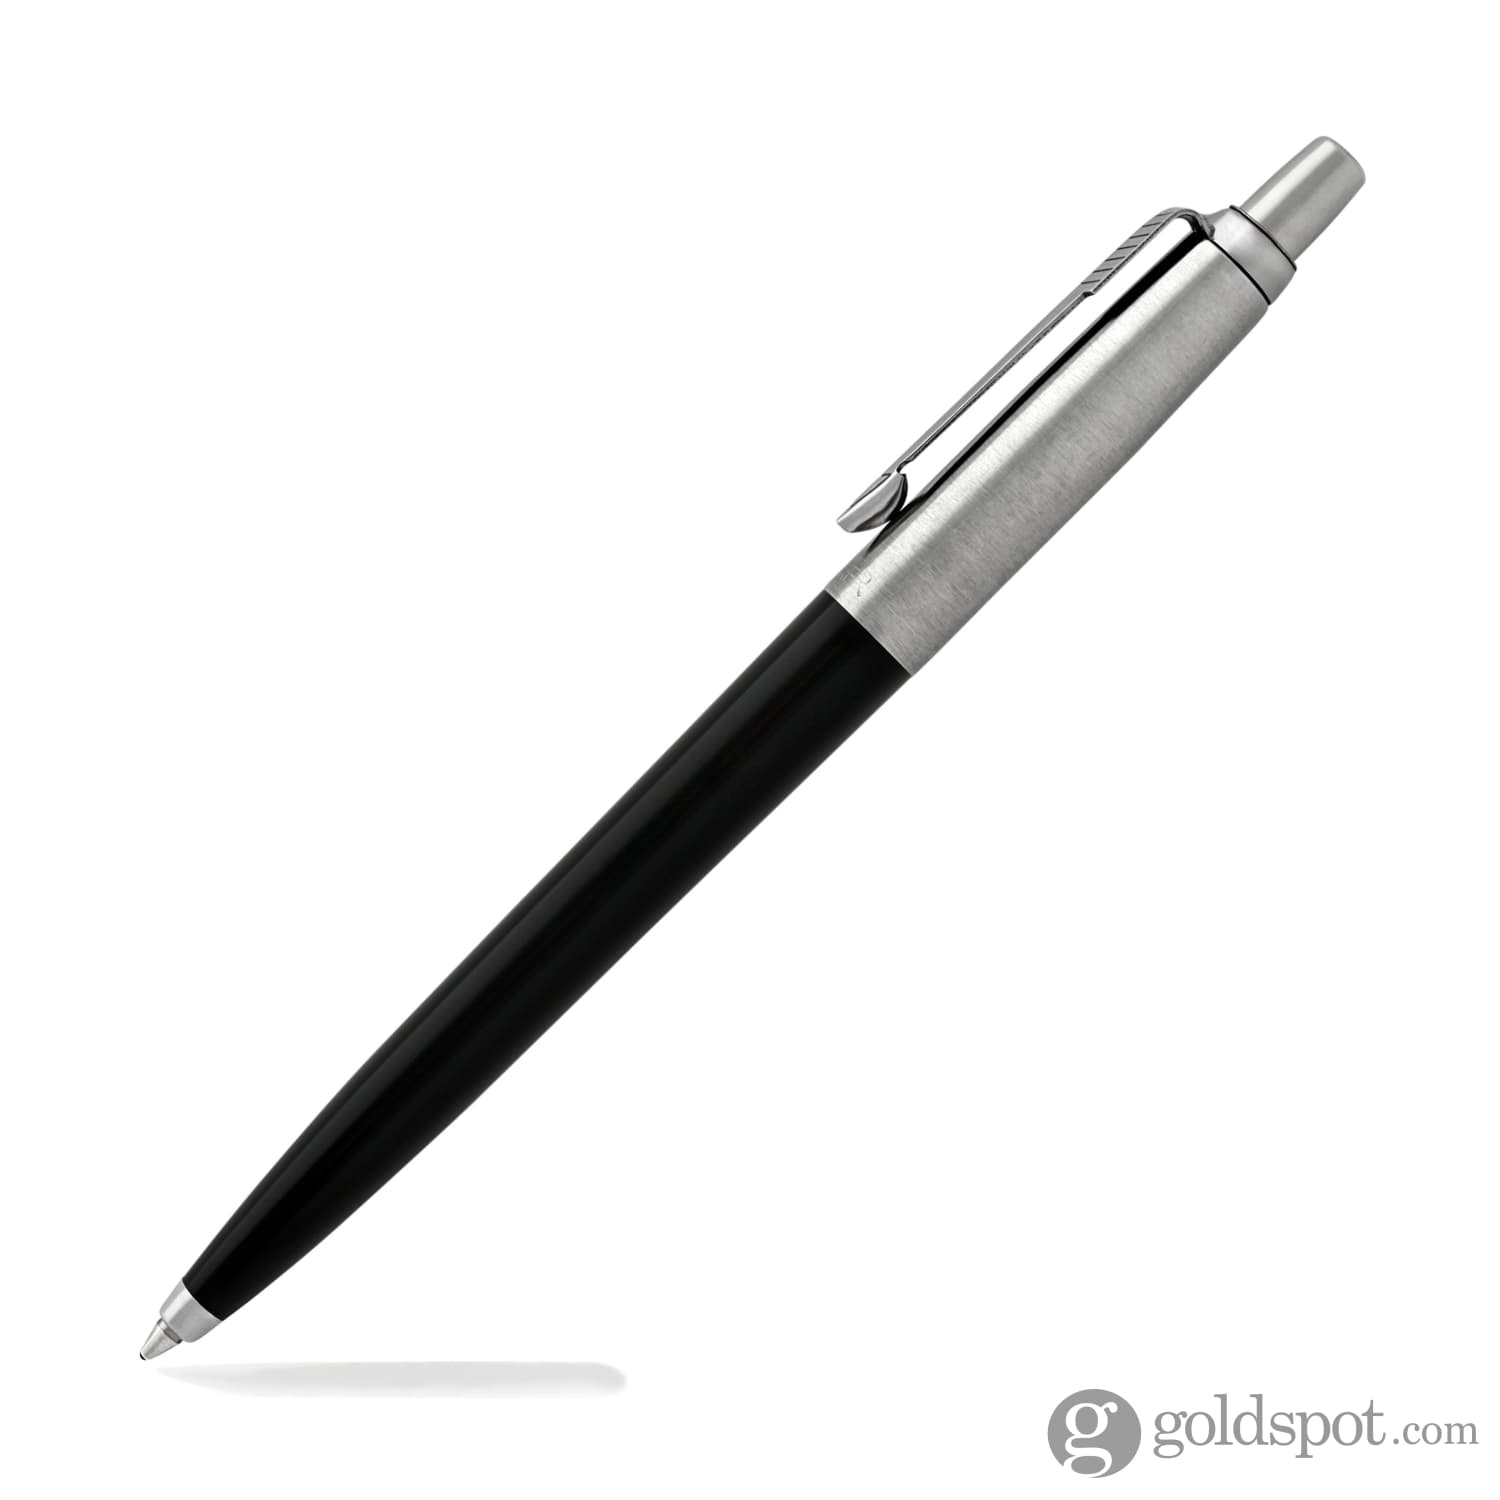 White Signature Ballpoint Pens with Black Ink, Set of 6, Ballpoint Pens